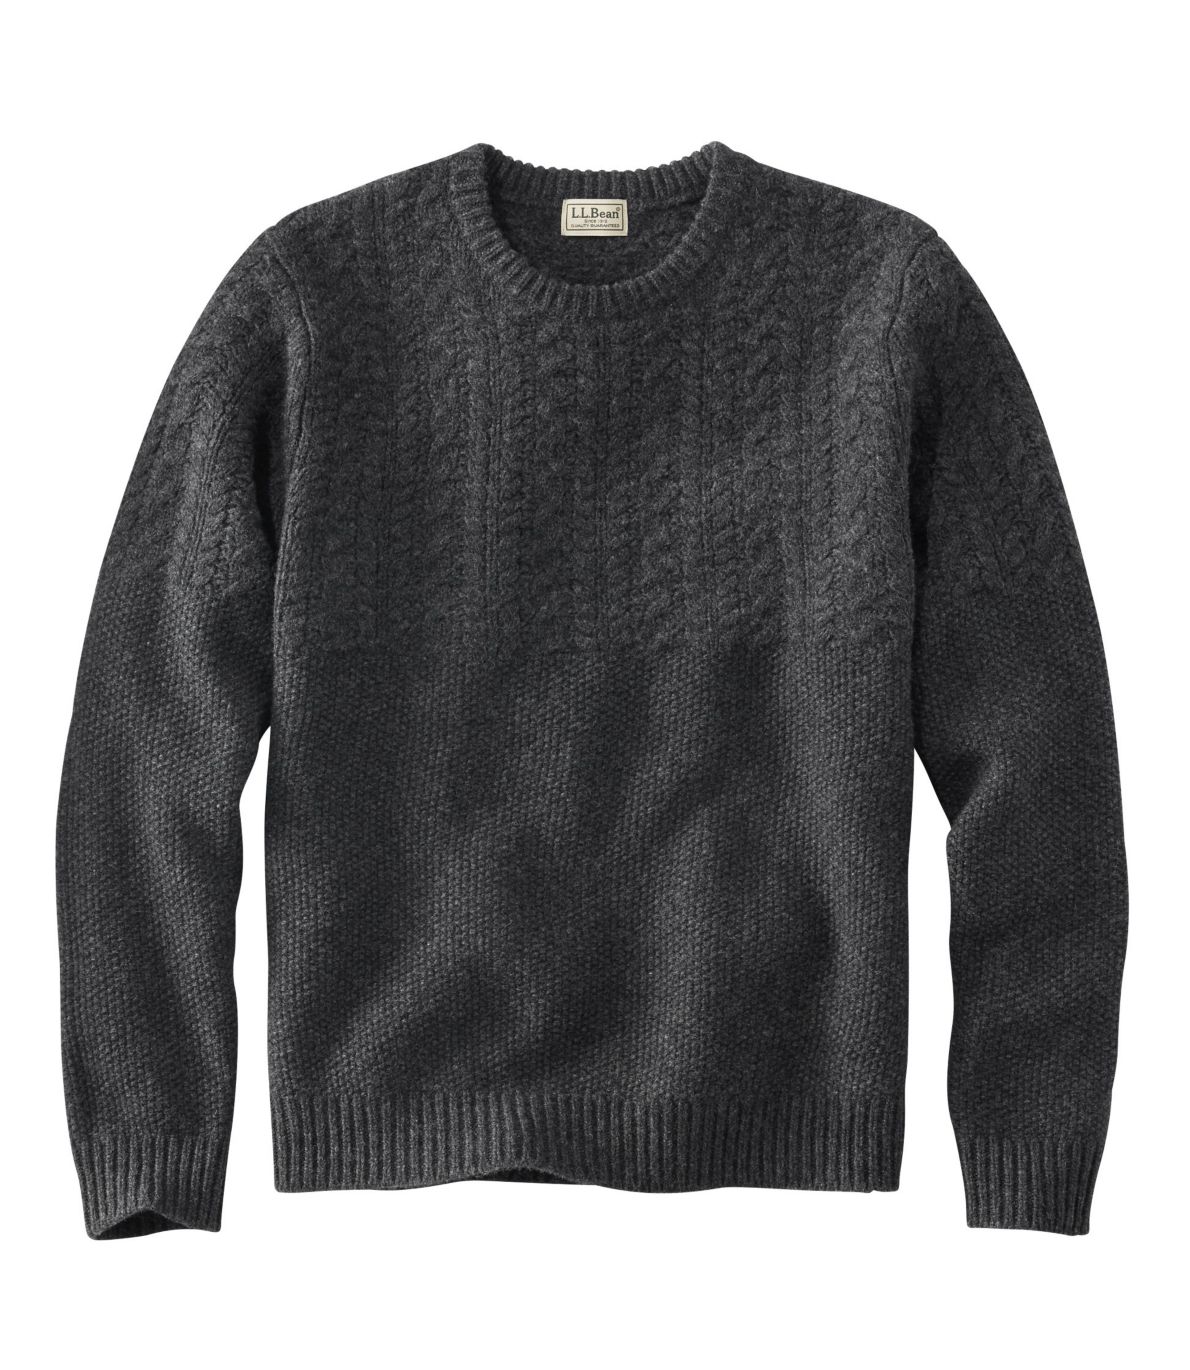 Washable Lambswool Sweaters, Mixed Stitch Crewneck